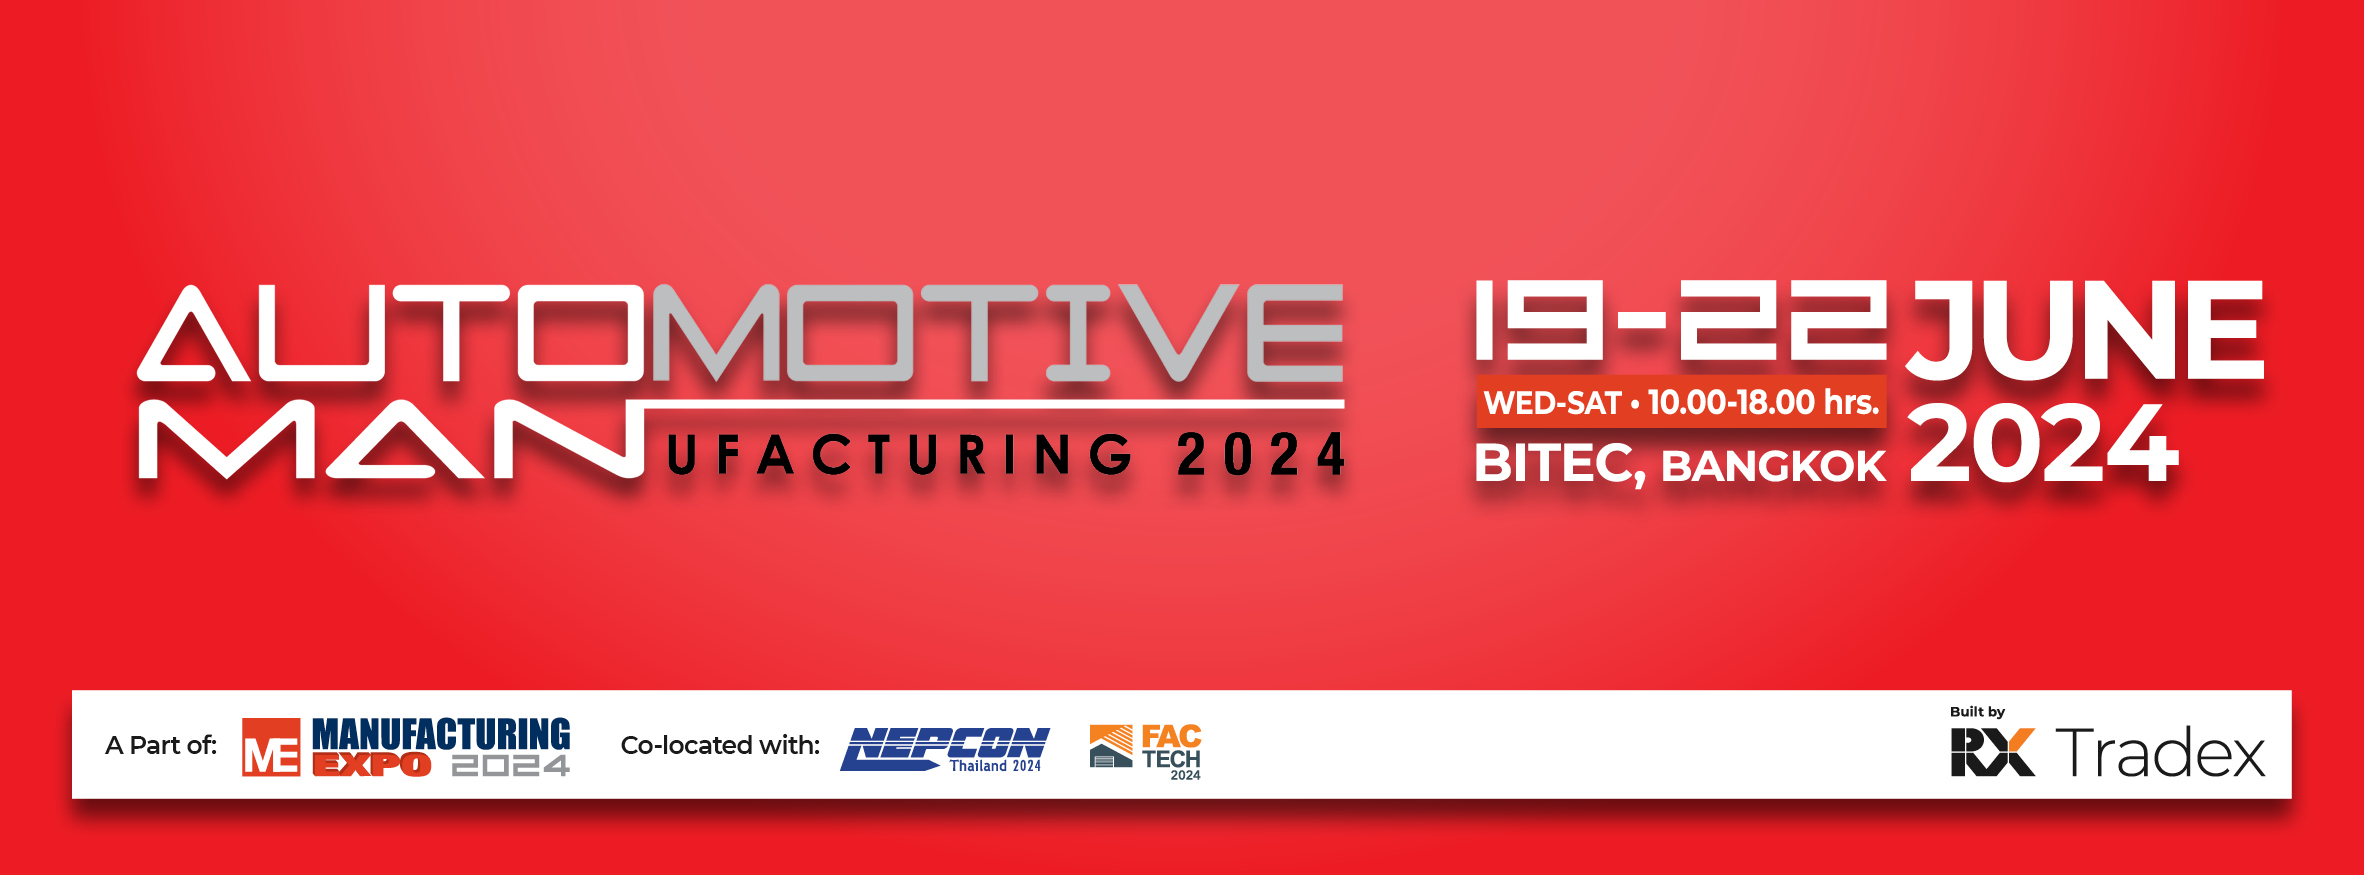 Automotive Manufacturing 2024, Bangkok Thailand, Bangkok, Thailand